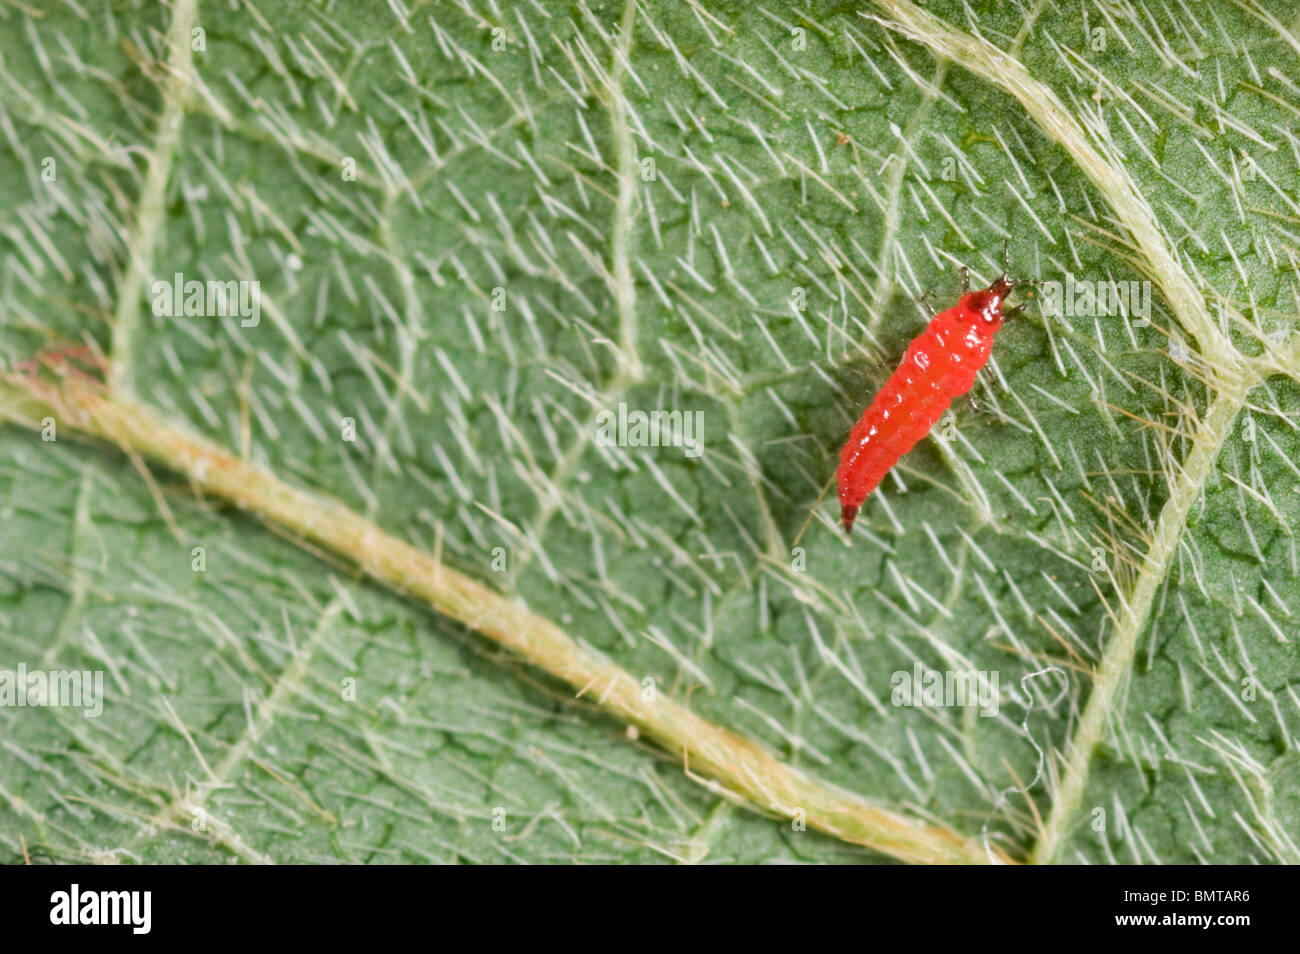 Thrips larve prédatrice rouge Banque D'Images